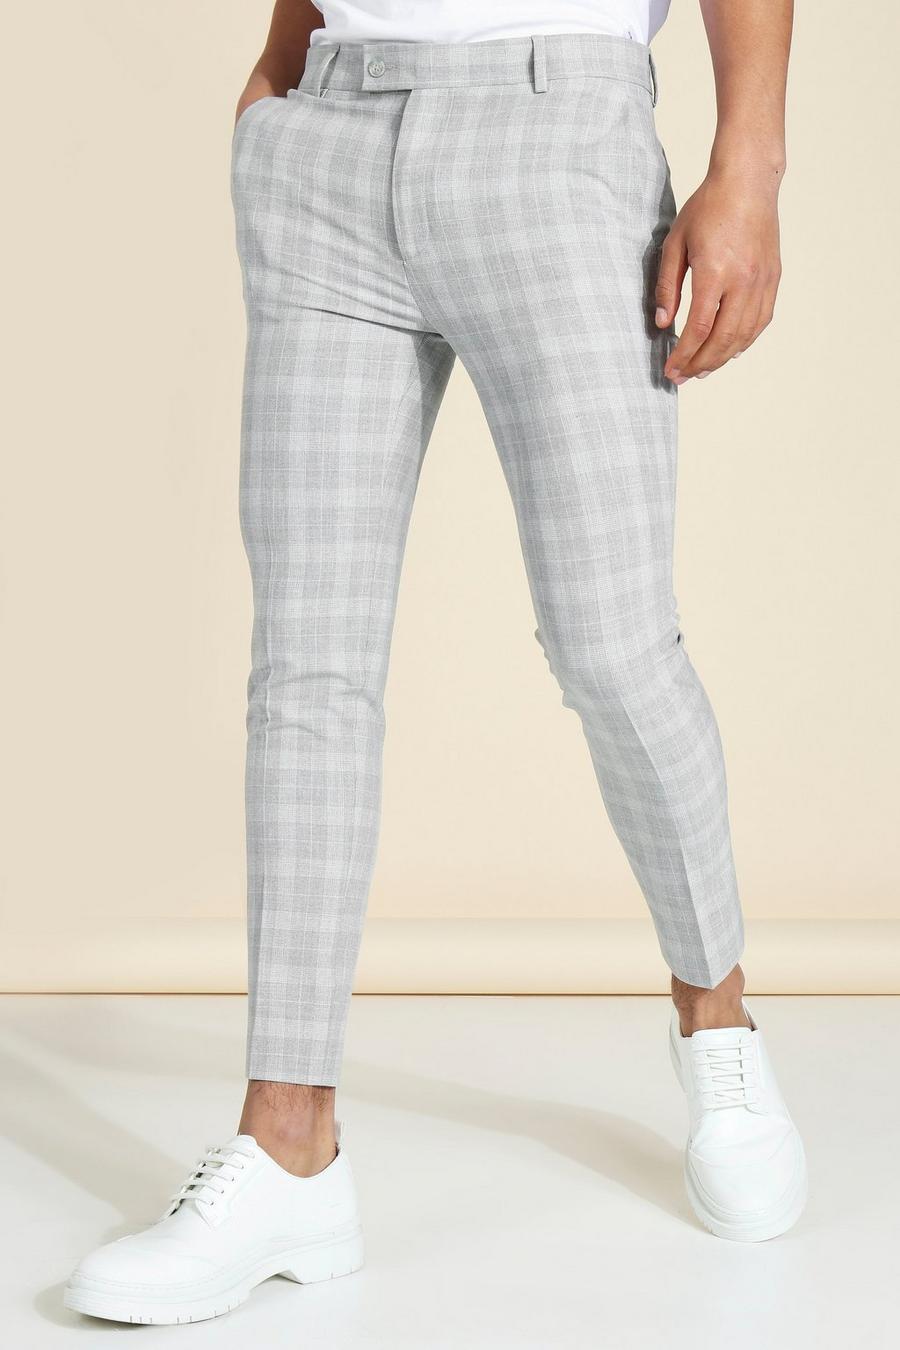 Pantaloni Capri sartoriali Super Skinny Fit a quadri, Grey grigio